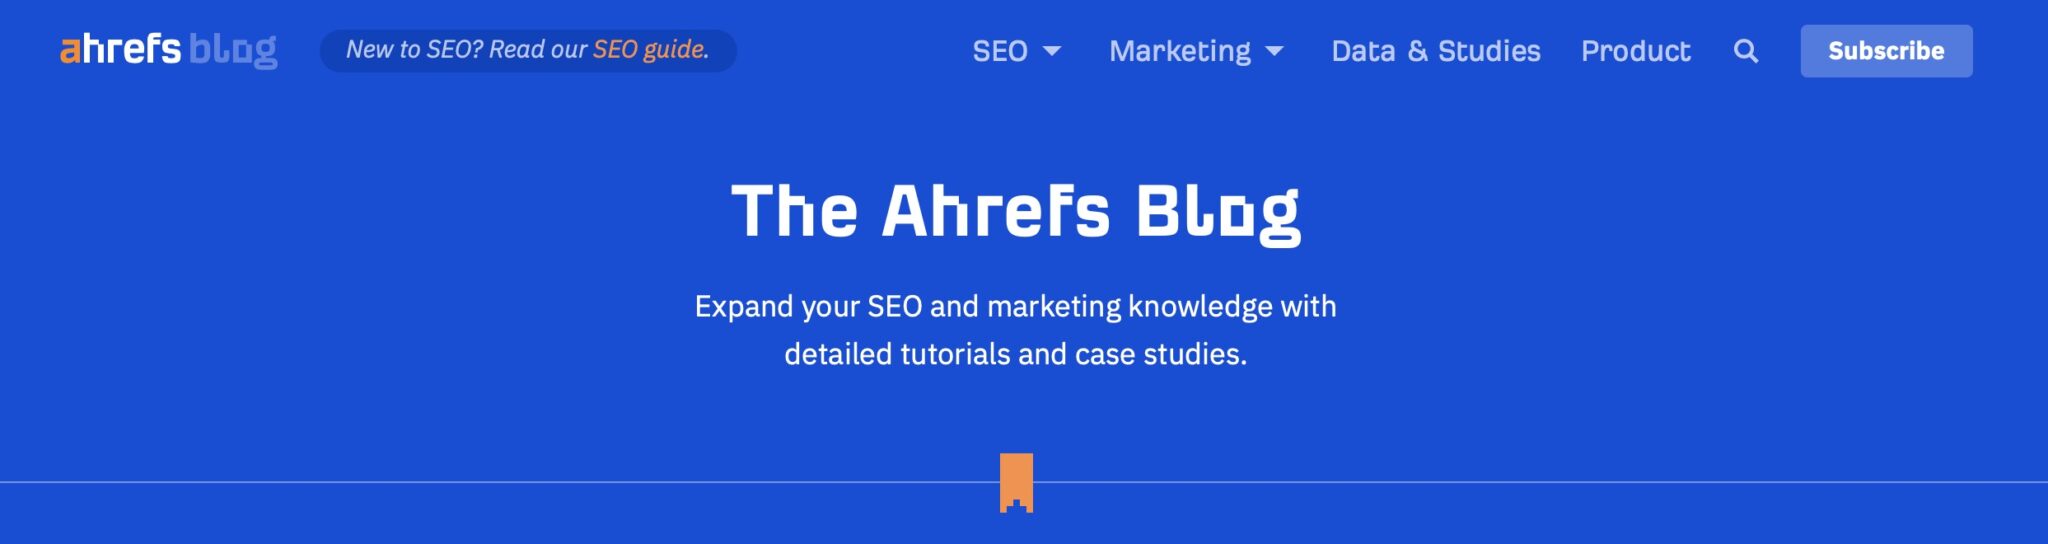 ahrefs blog scaled